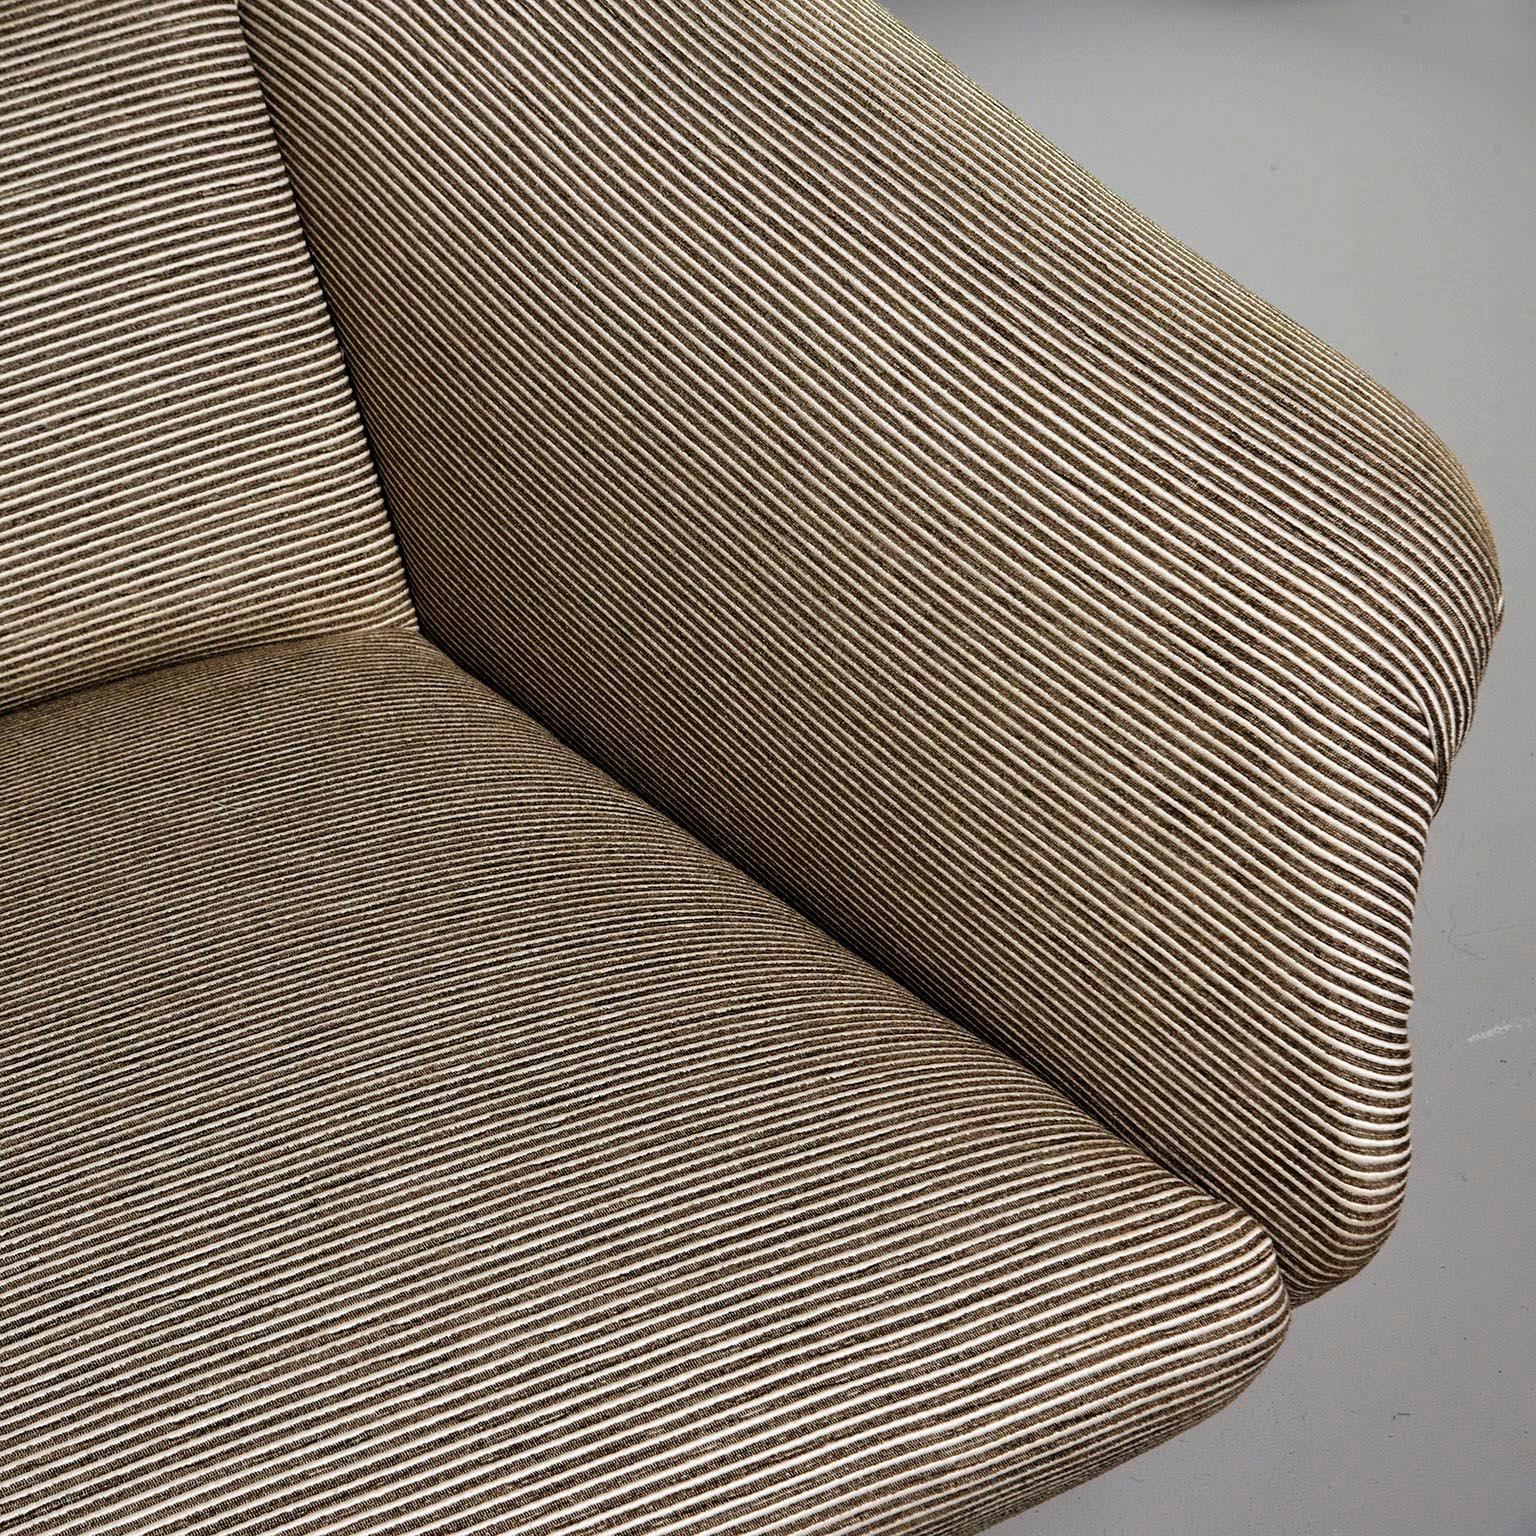 Newly Upholstered Midcentury Settee or Sofa by Gigi Radice for Minotti 1